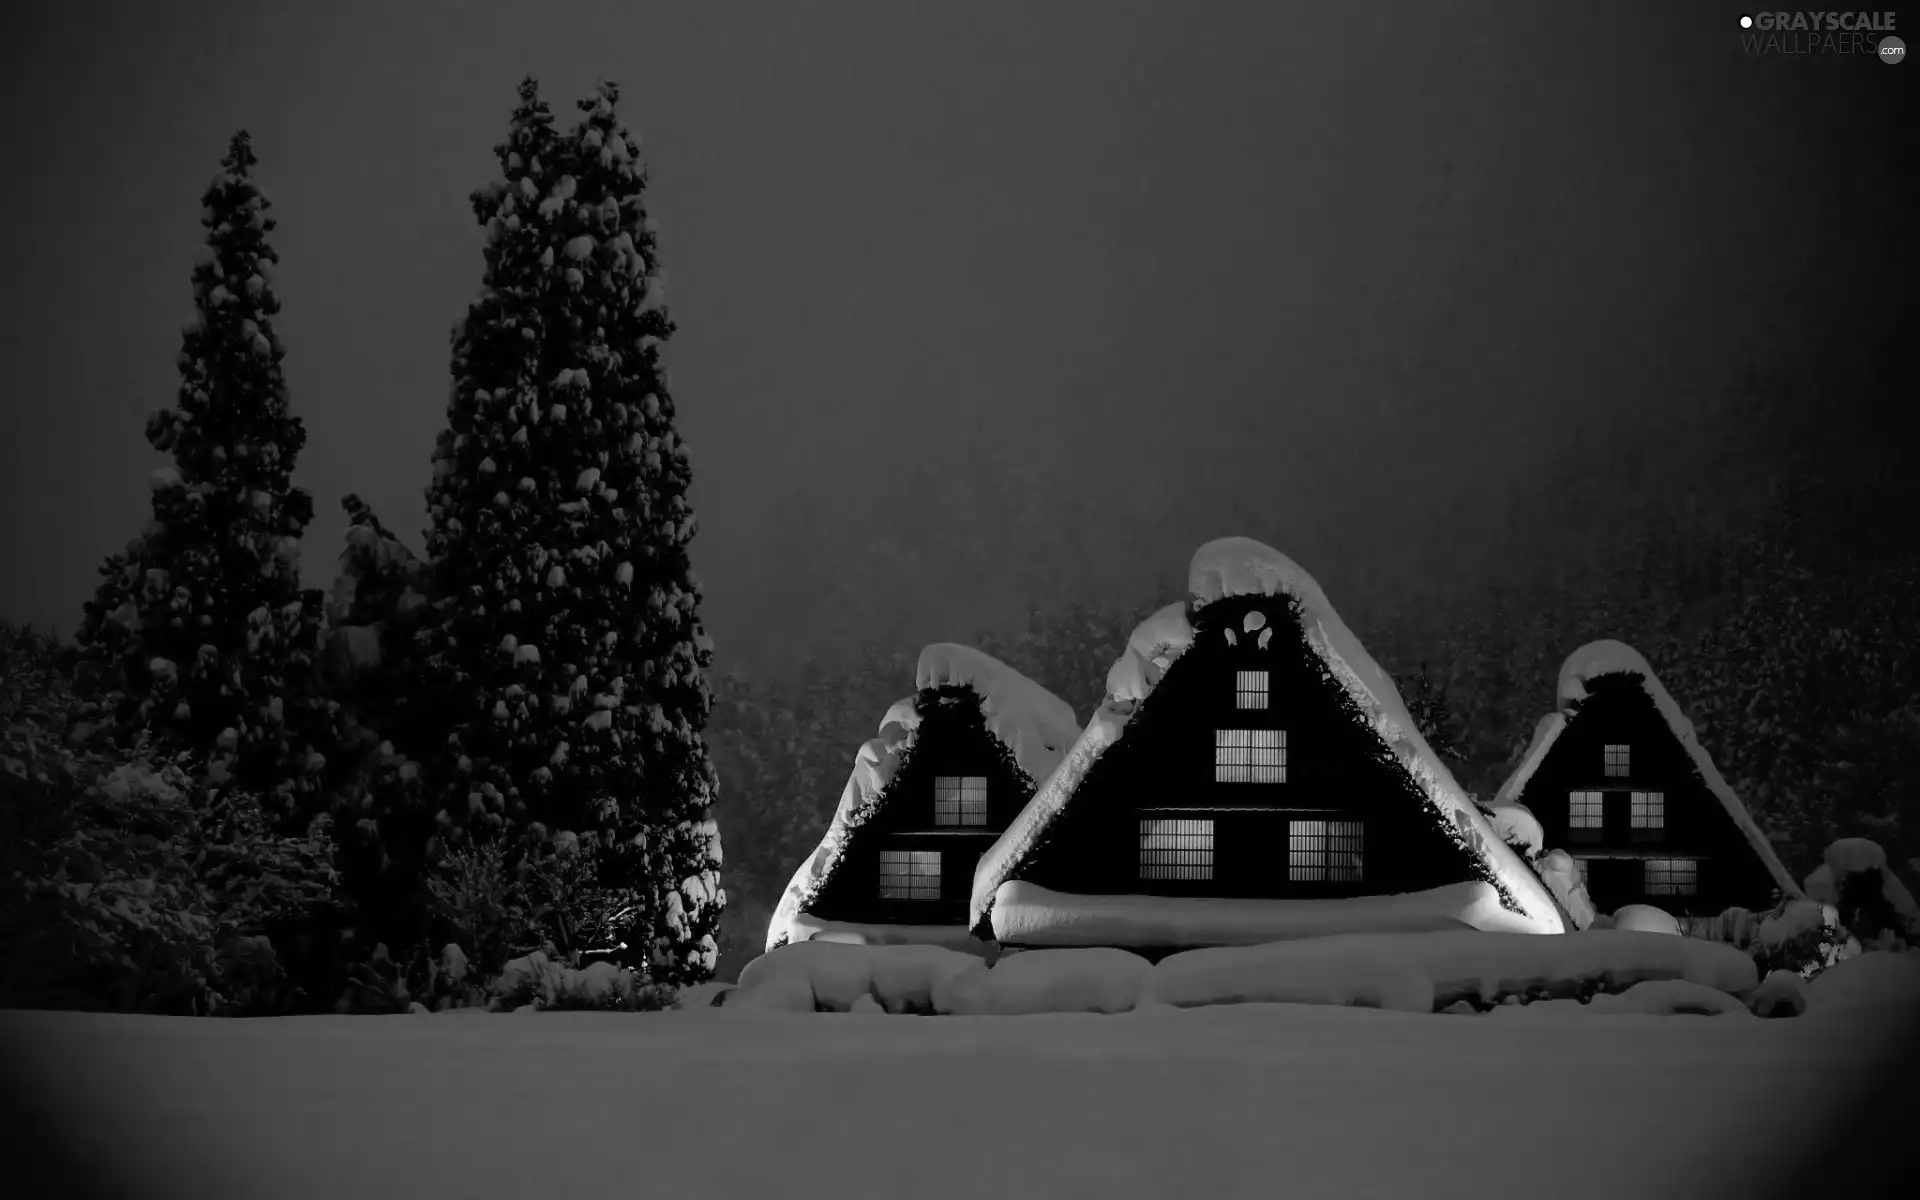 Night, winter, Houses, forest, illuminated